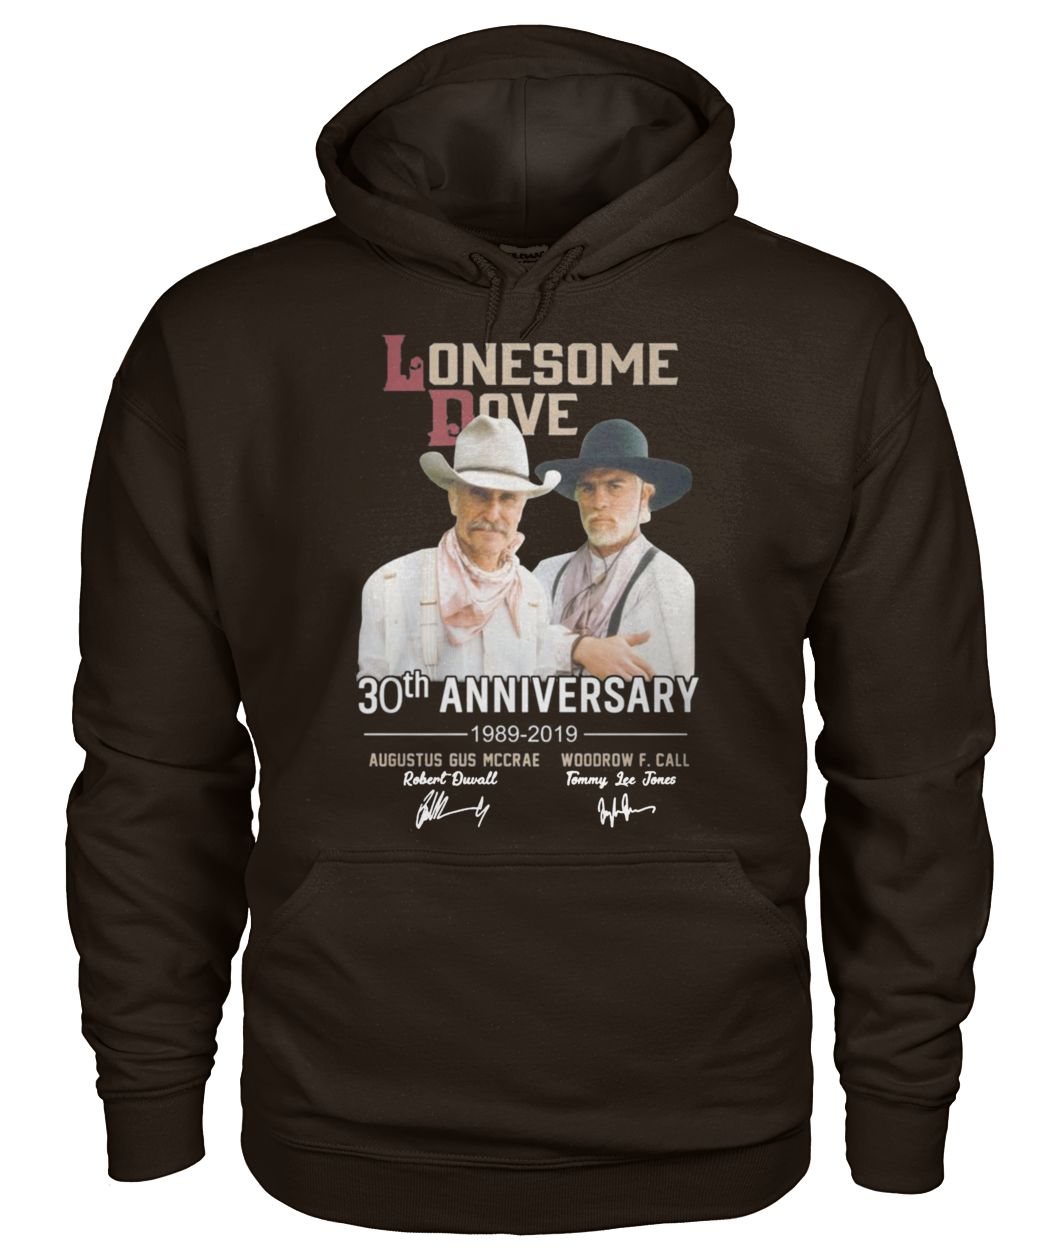 Lonesome dove 30th anniversary 1989-2019 signatures gildan hoodie